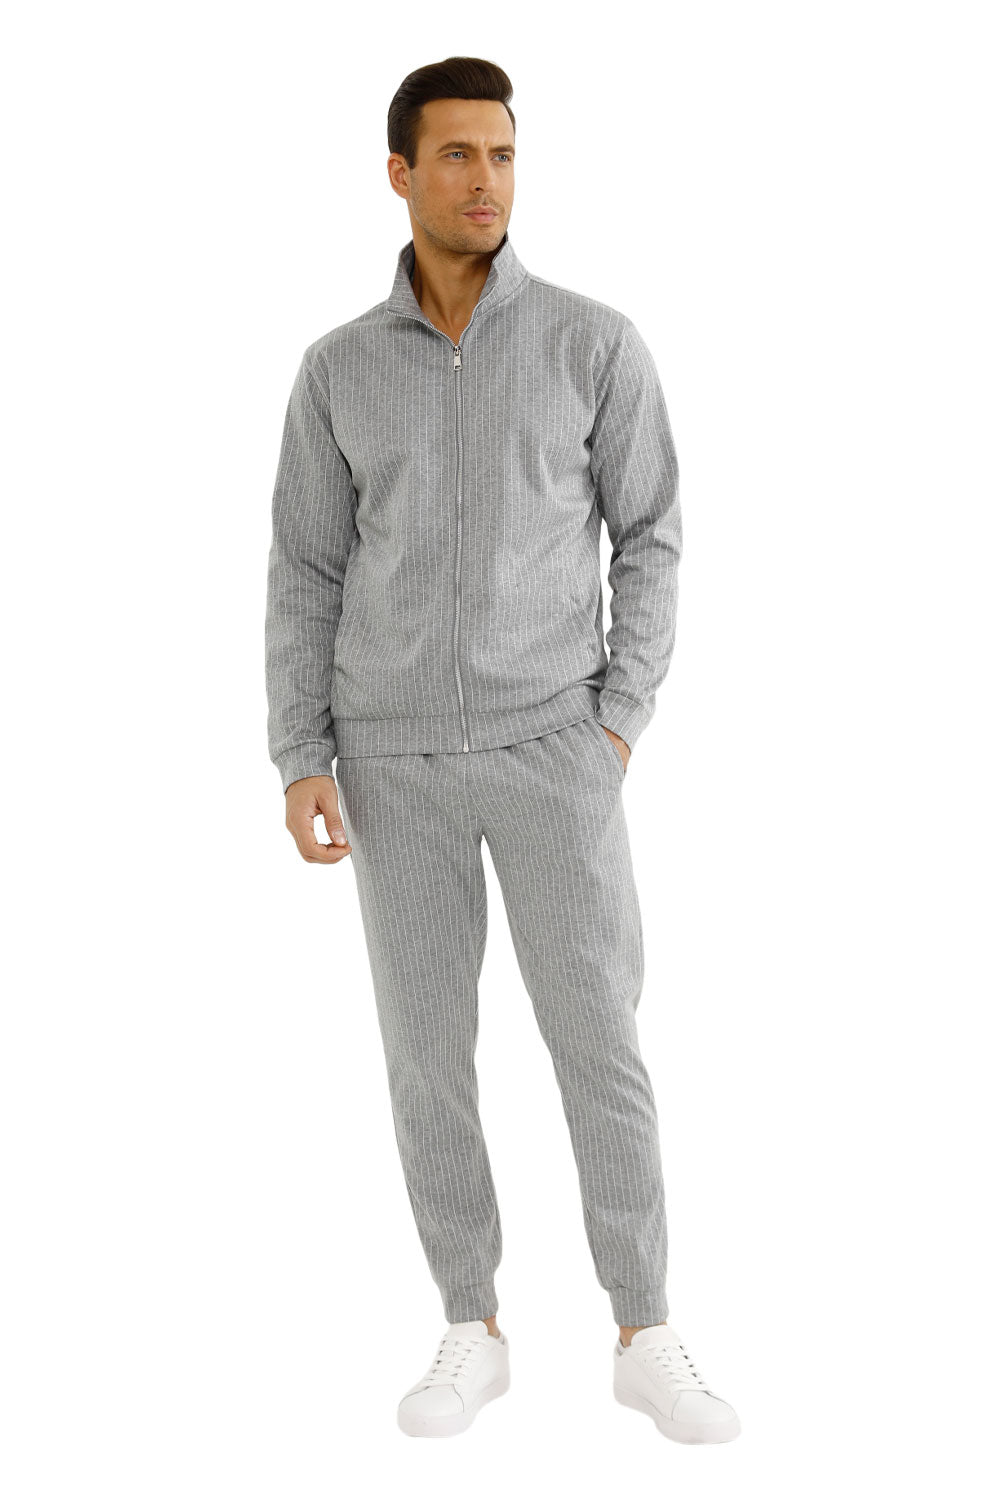 Gingtto Men's Sweatsuits 2 Piece, Track Jacket & Joggers Sets-Grey